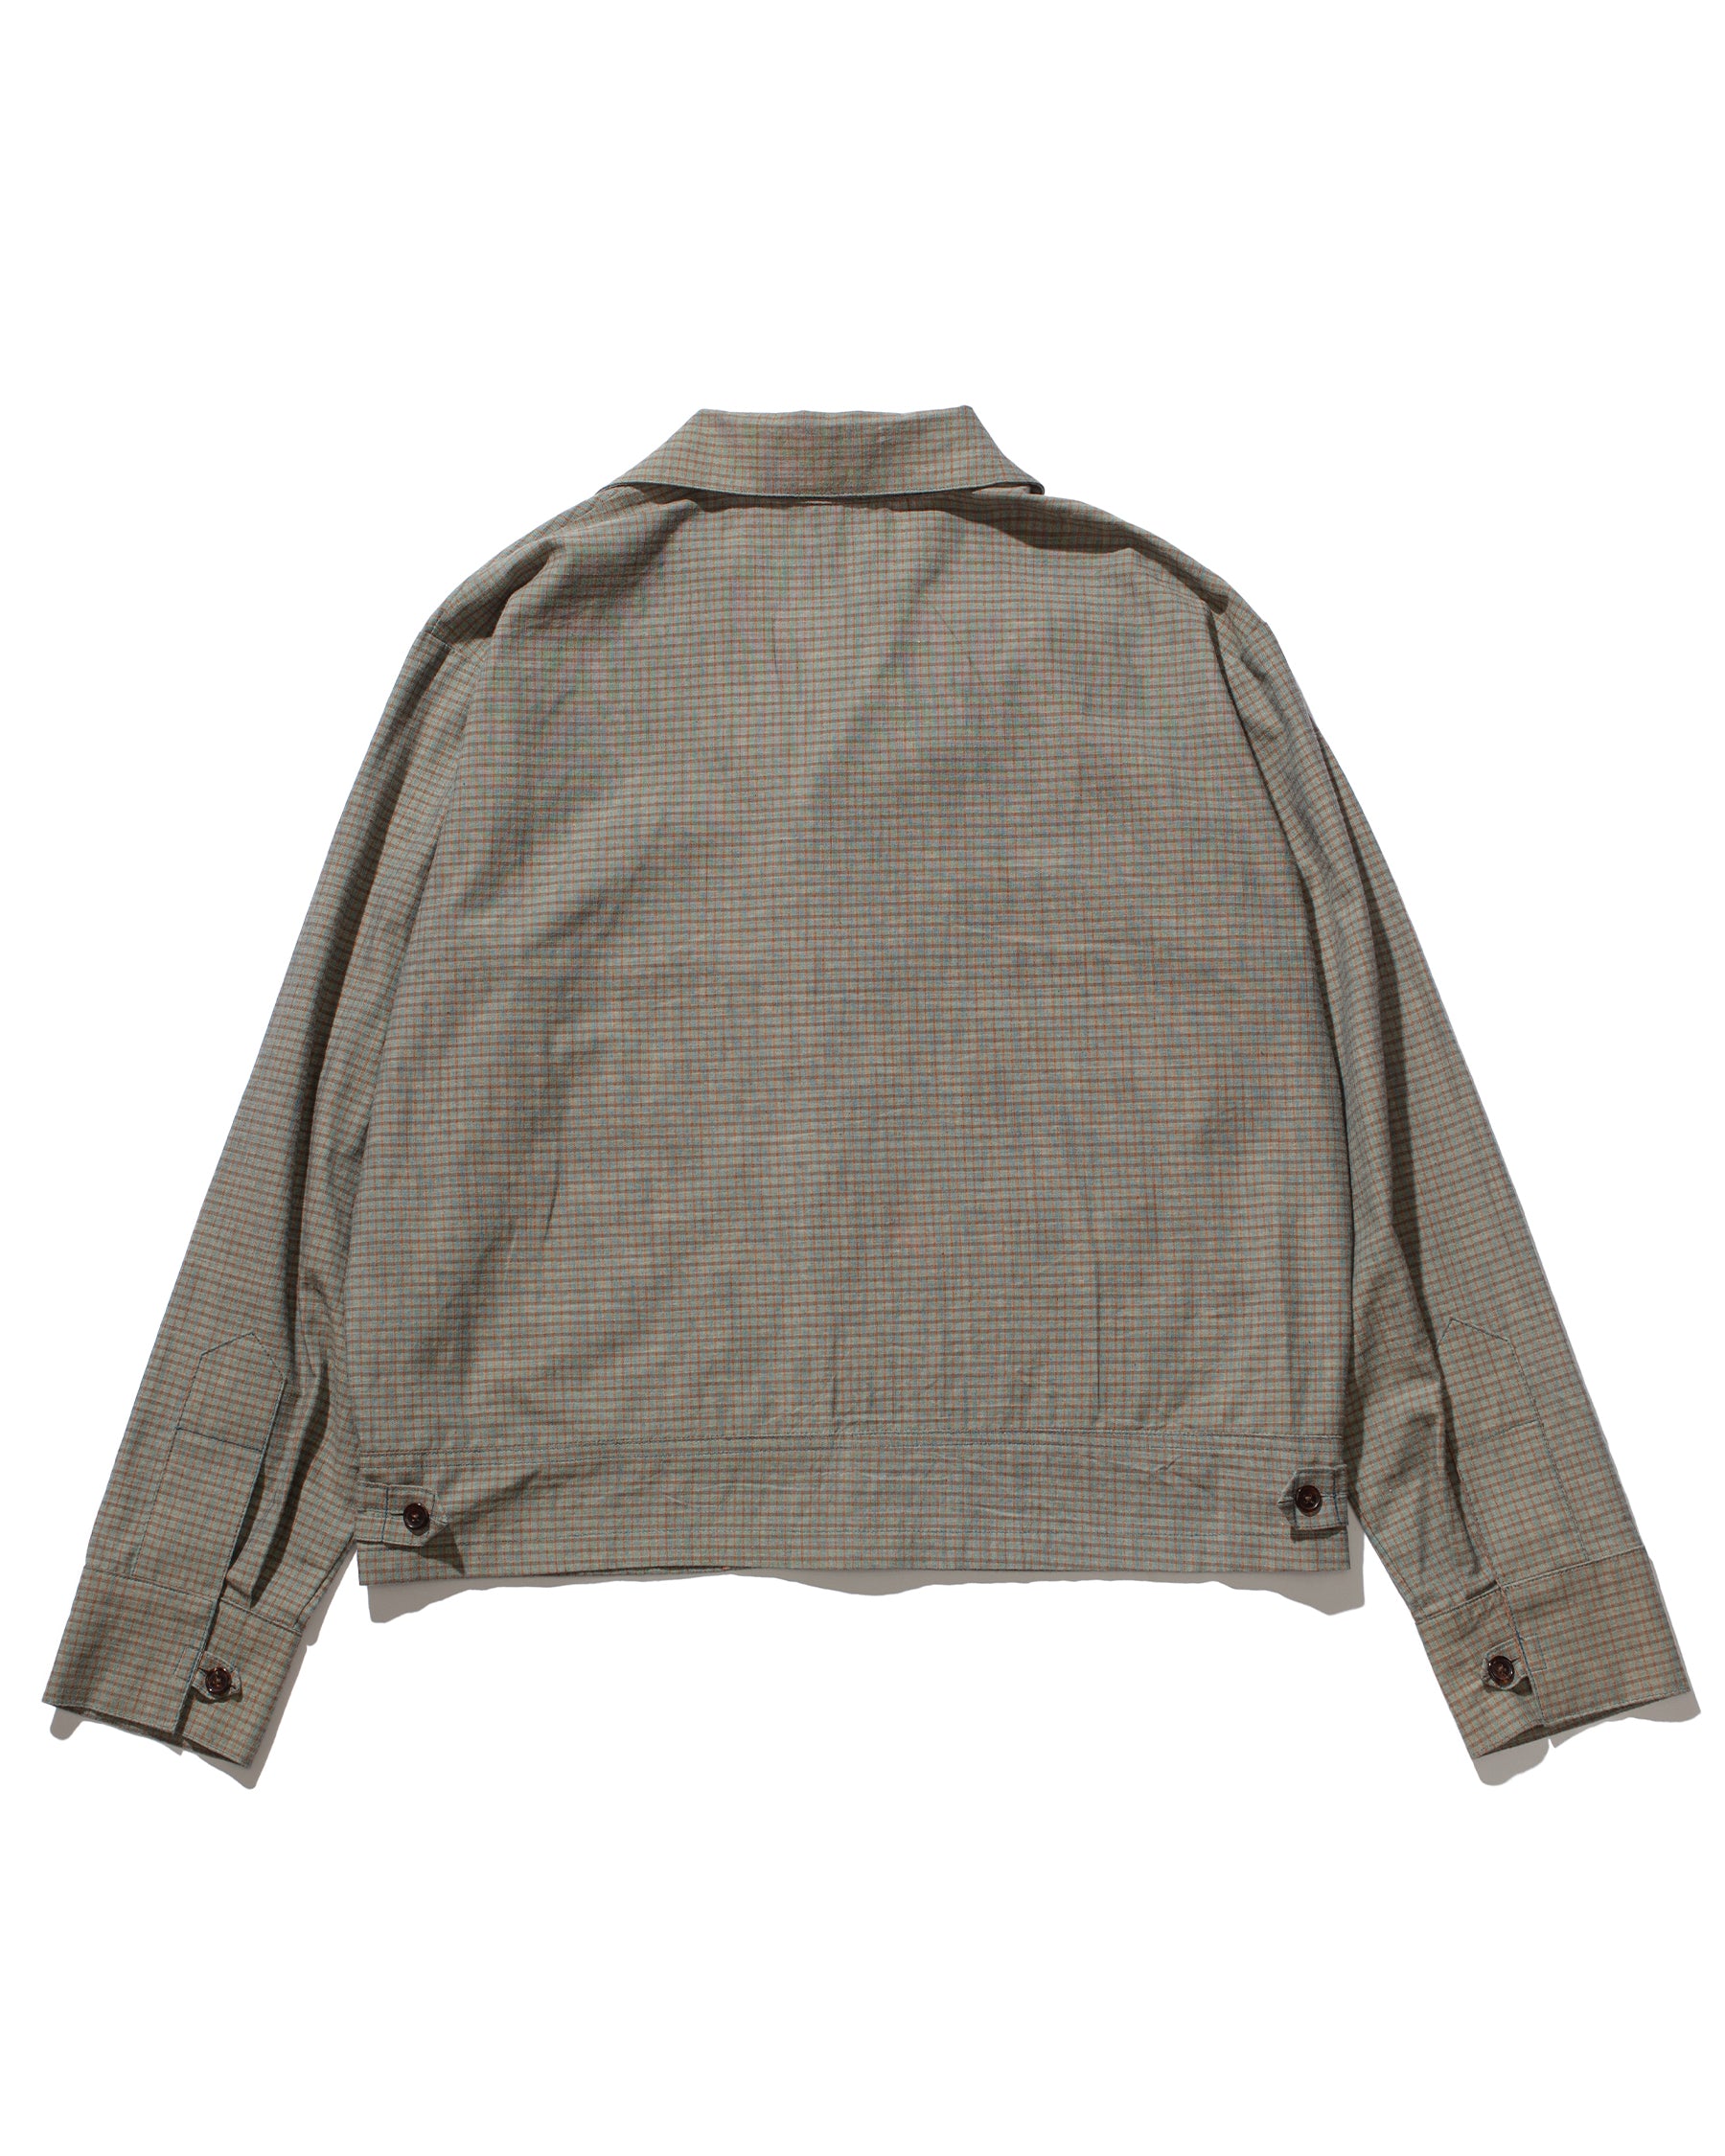 Durango Denim Shirt Jacket - Indigo/Rust by Oddinary Studios – OddinaryShop